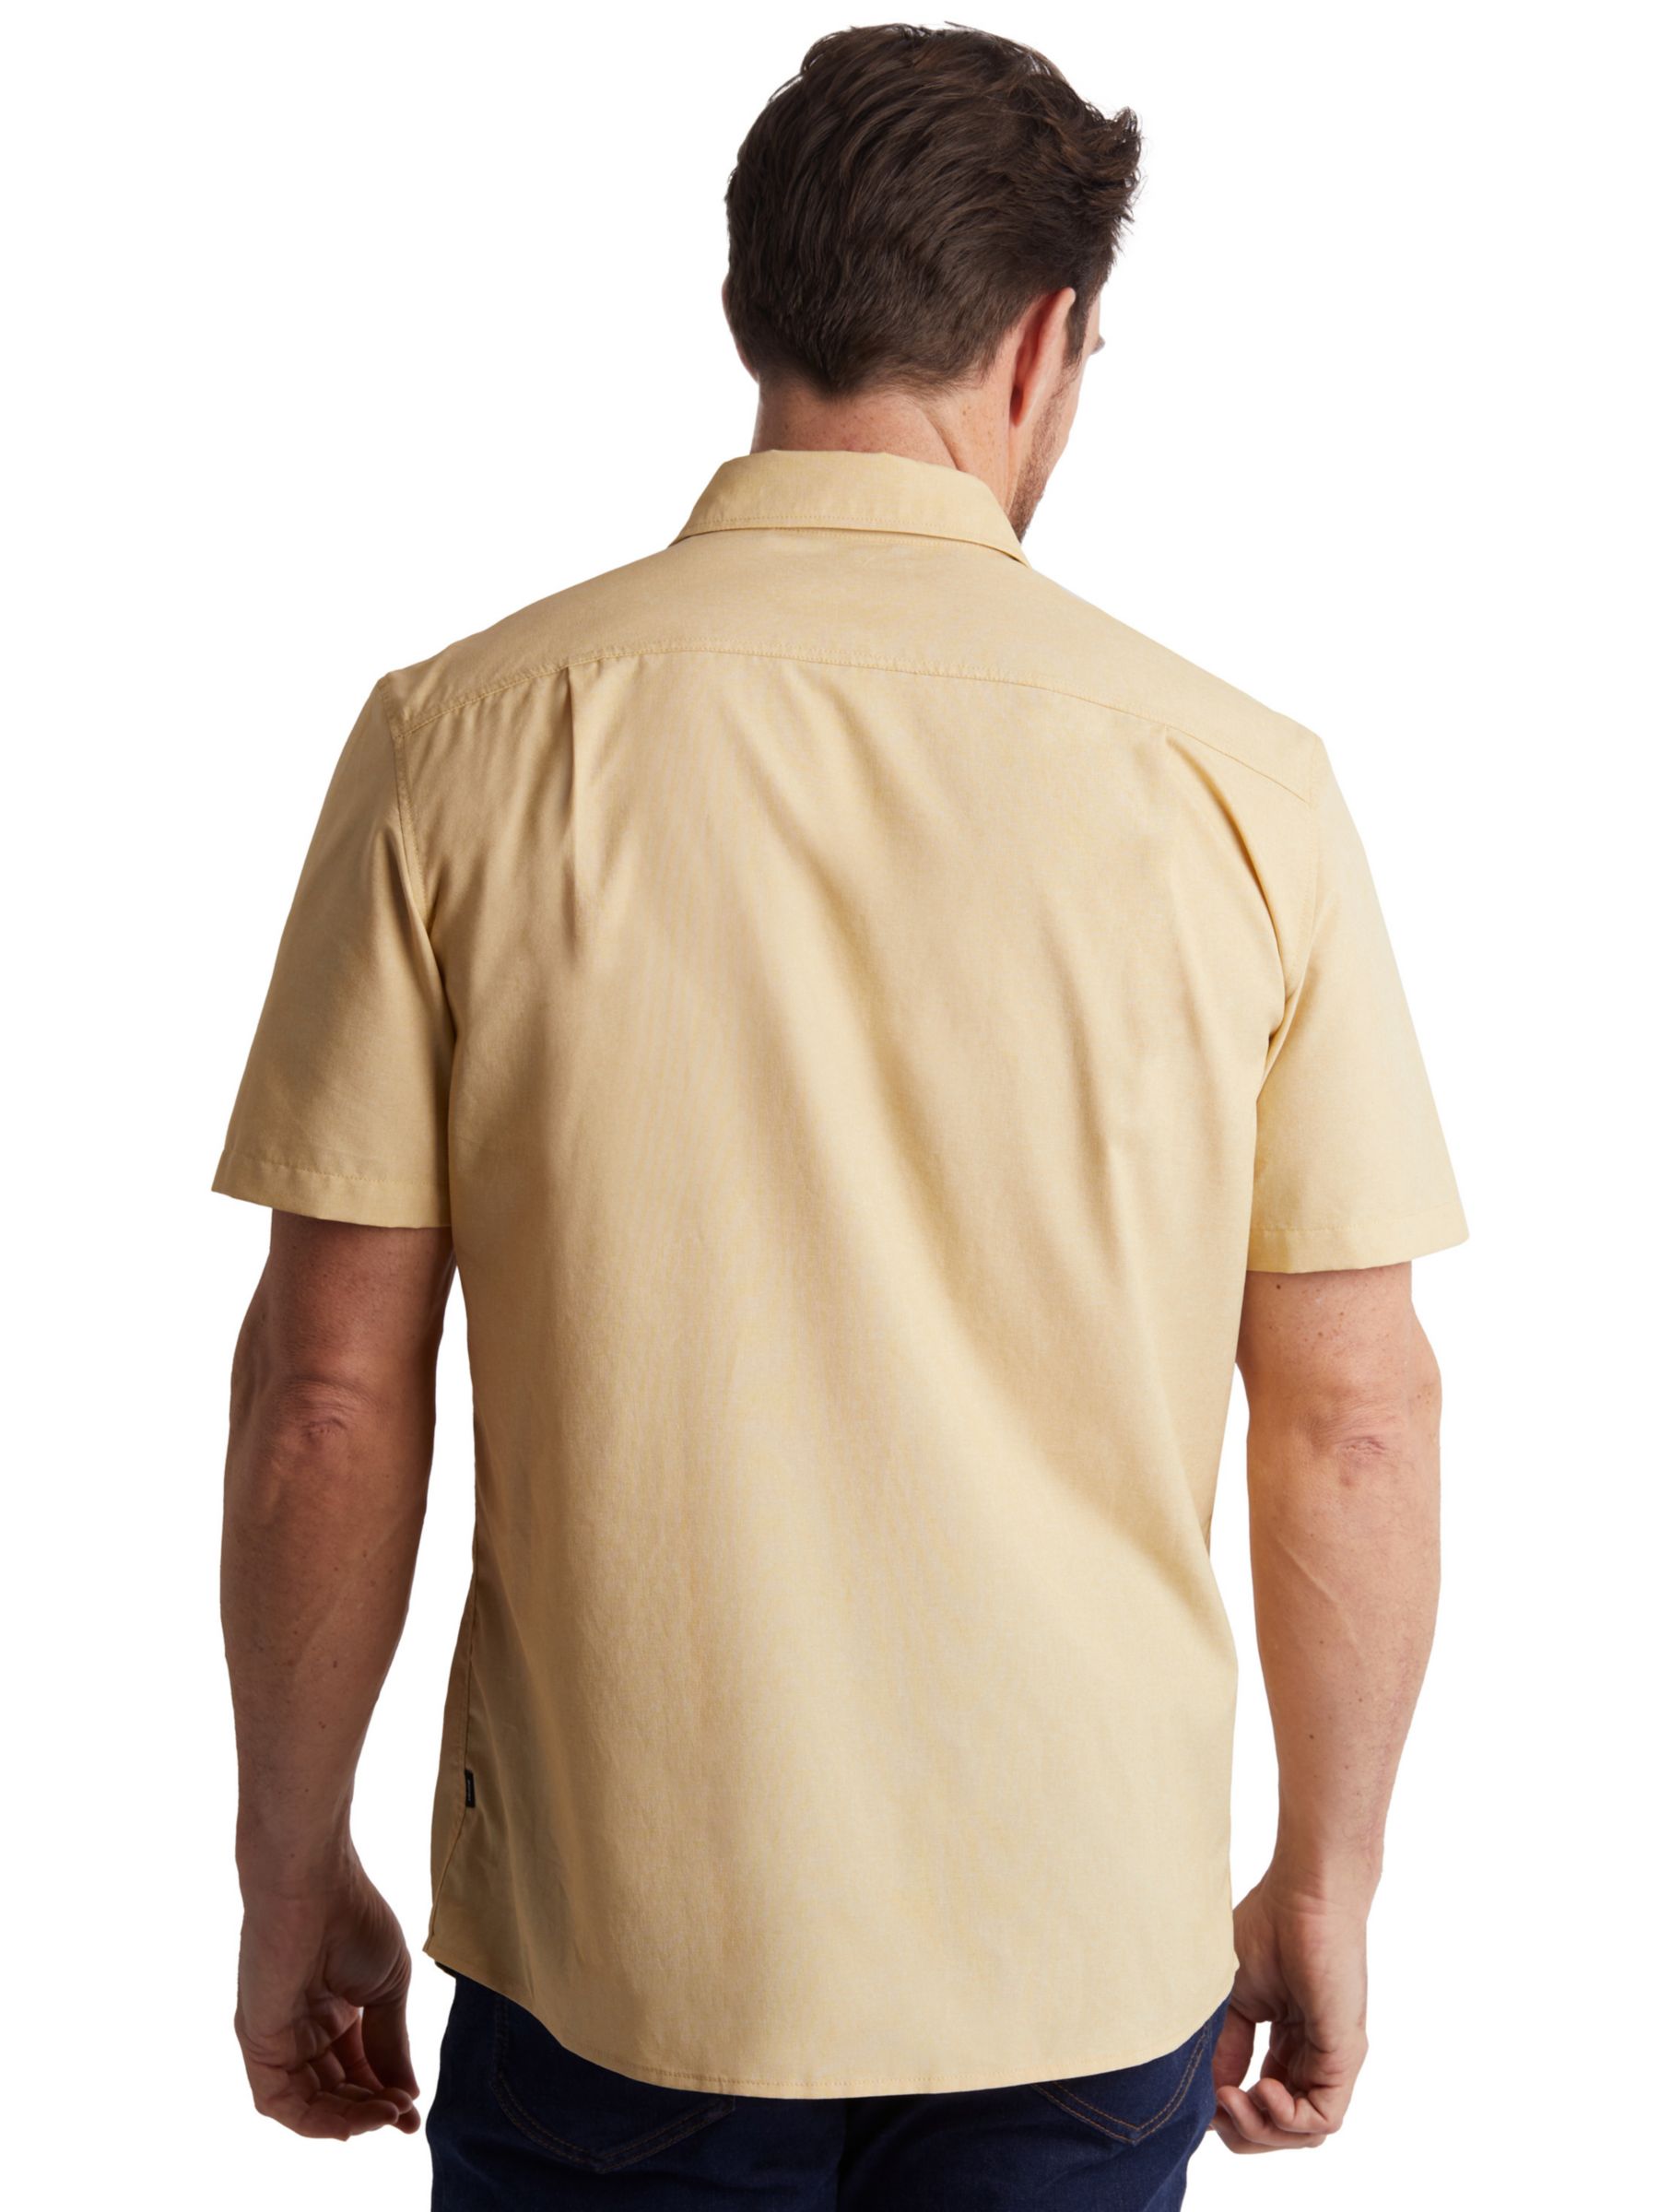 Rohan Finchley Lightweight Short Sleeve Shirt, Iris Yellow, S